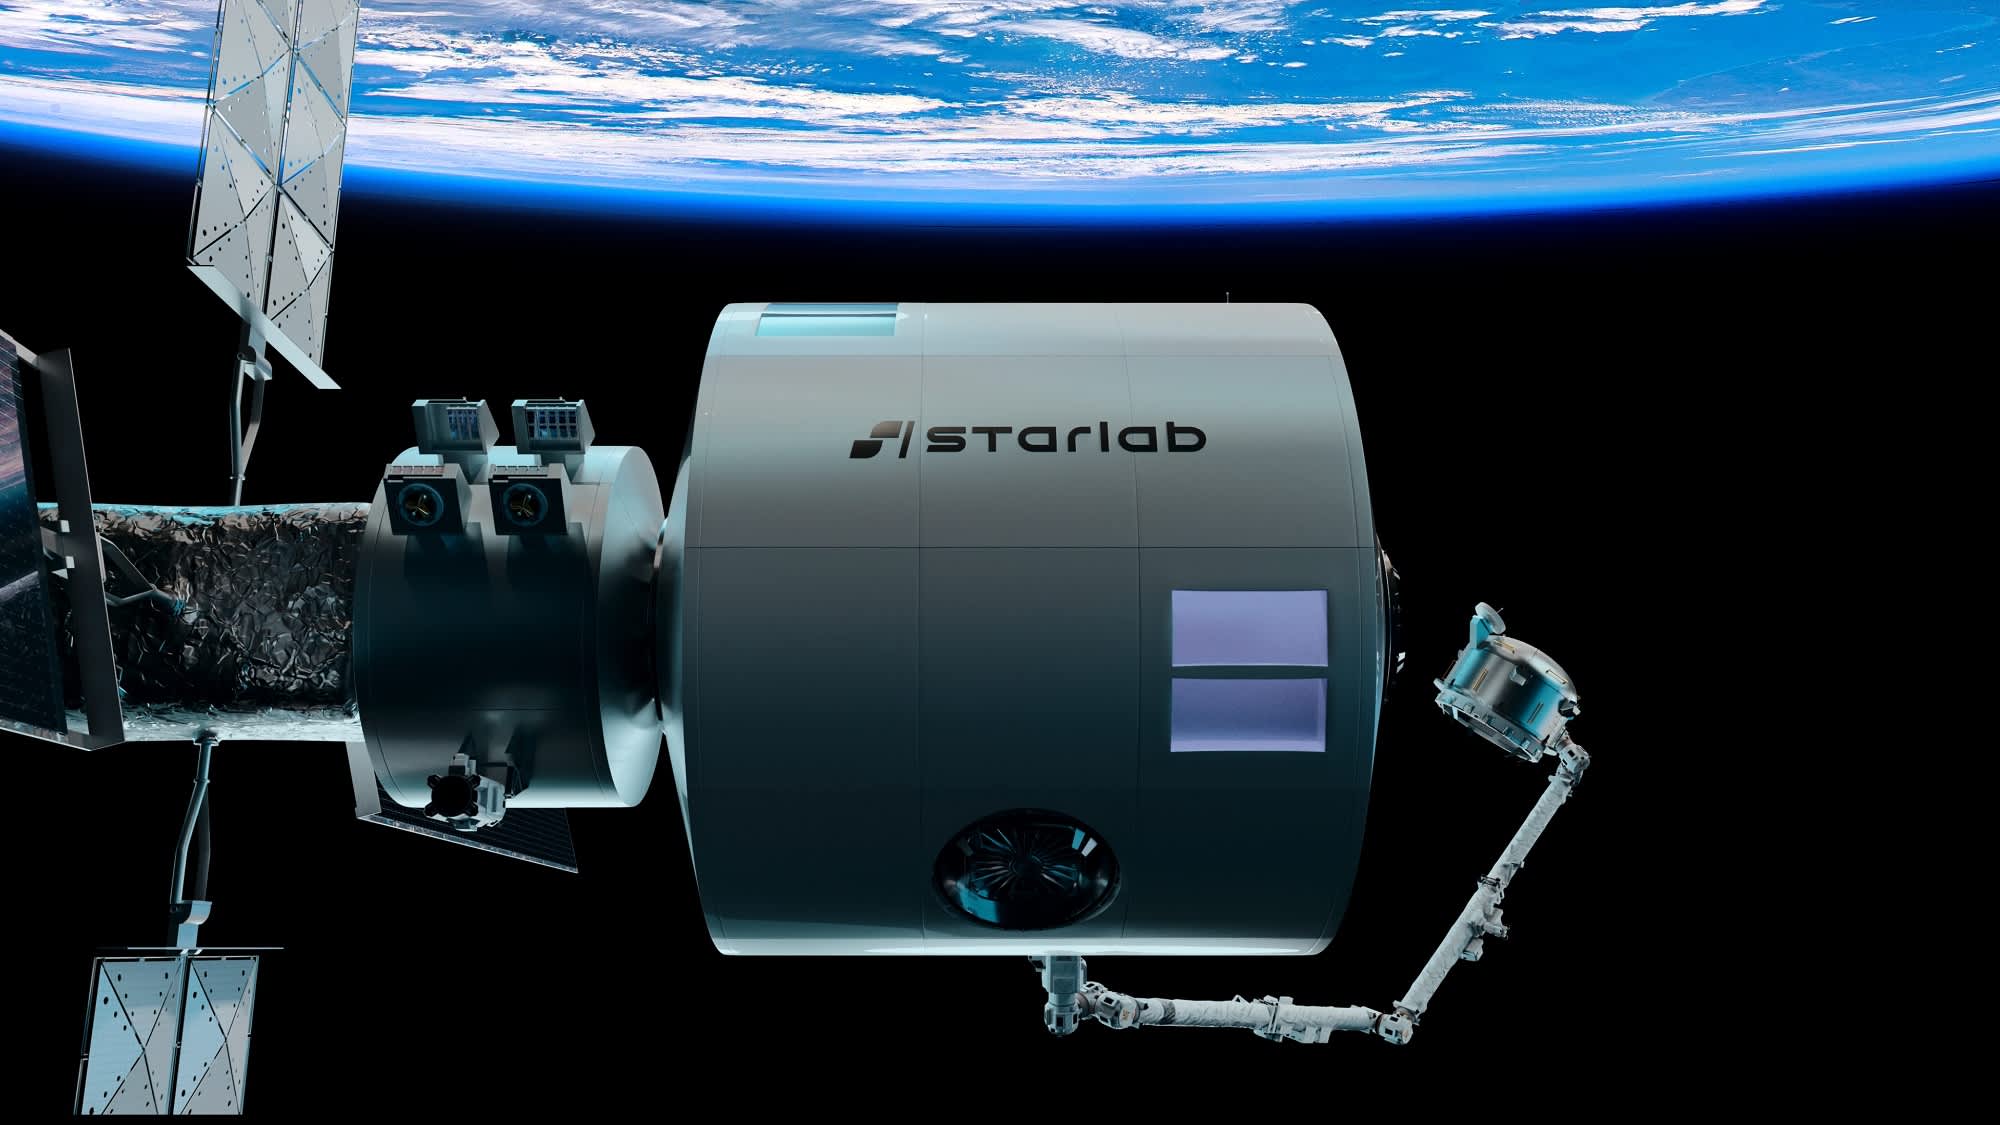 Voyager의 Starlab 우주 정거장, SpaceX 우주선 발사 구매